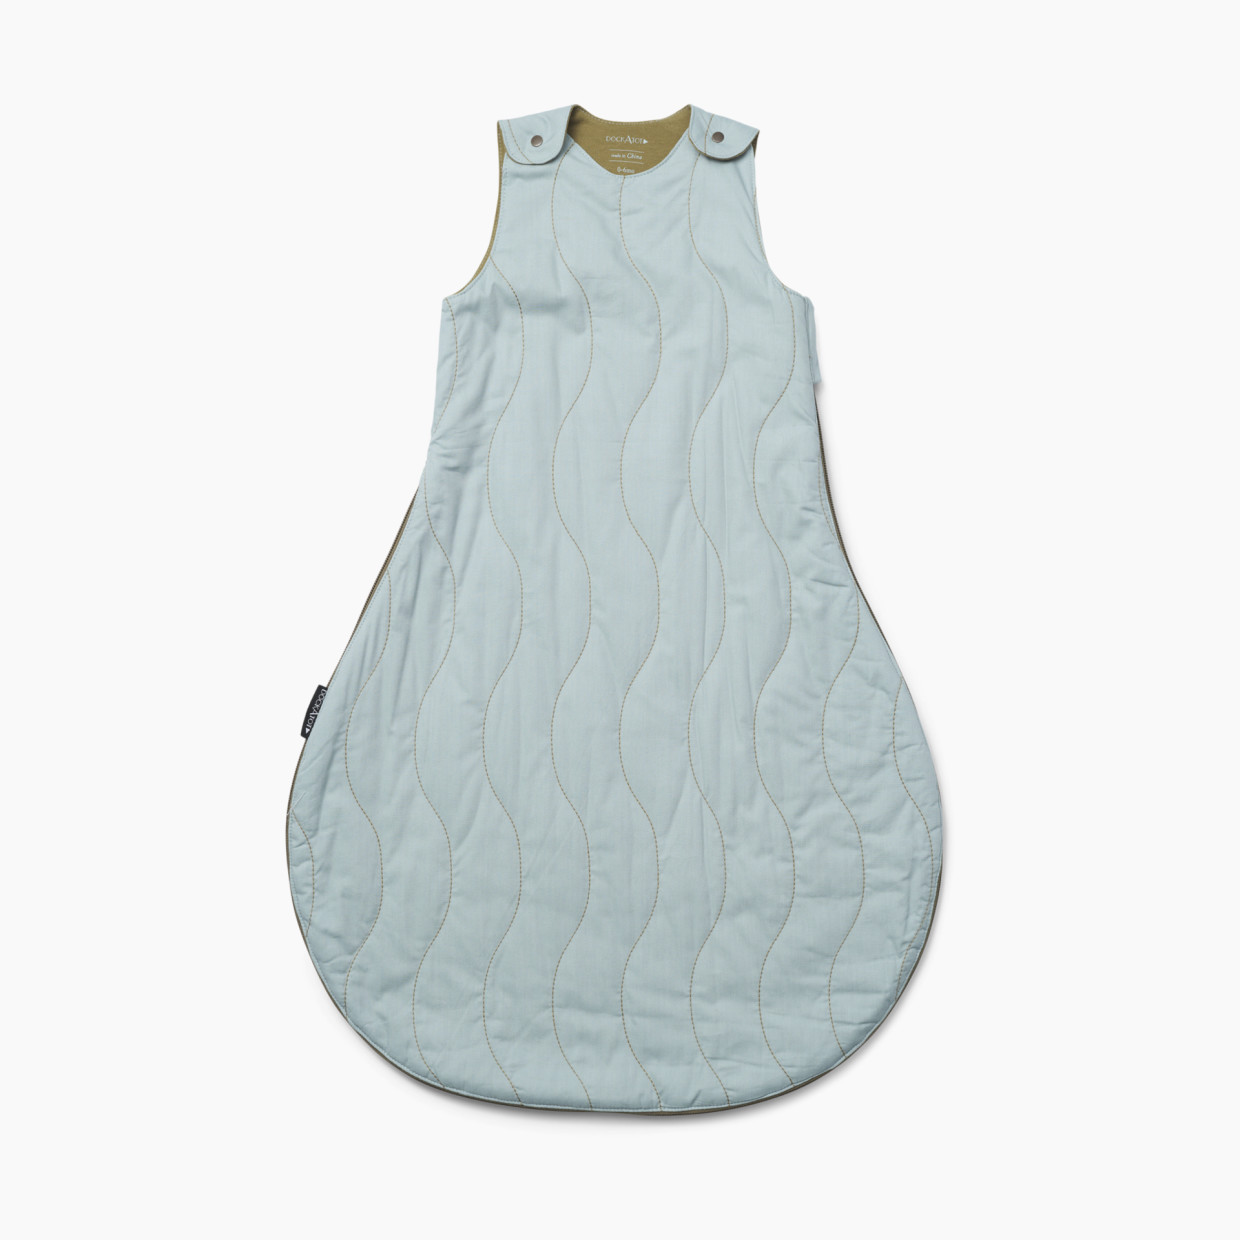 DockATot Sleep Bag TOG 2.5 - Blue Surf/Avocado, 0-6 M.